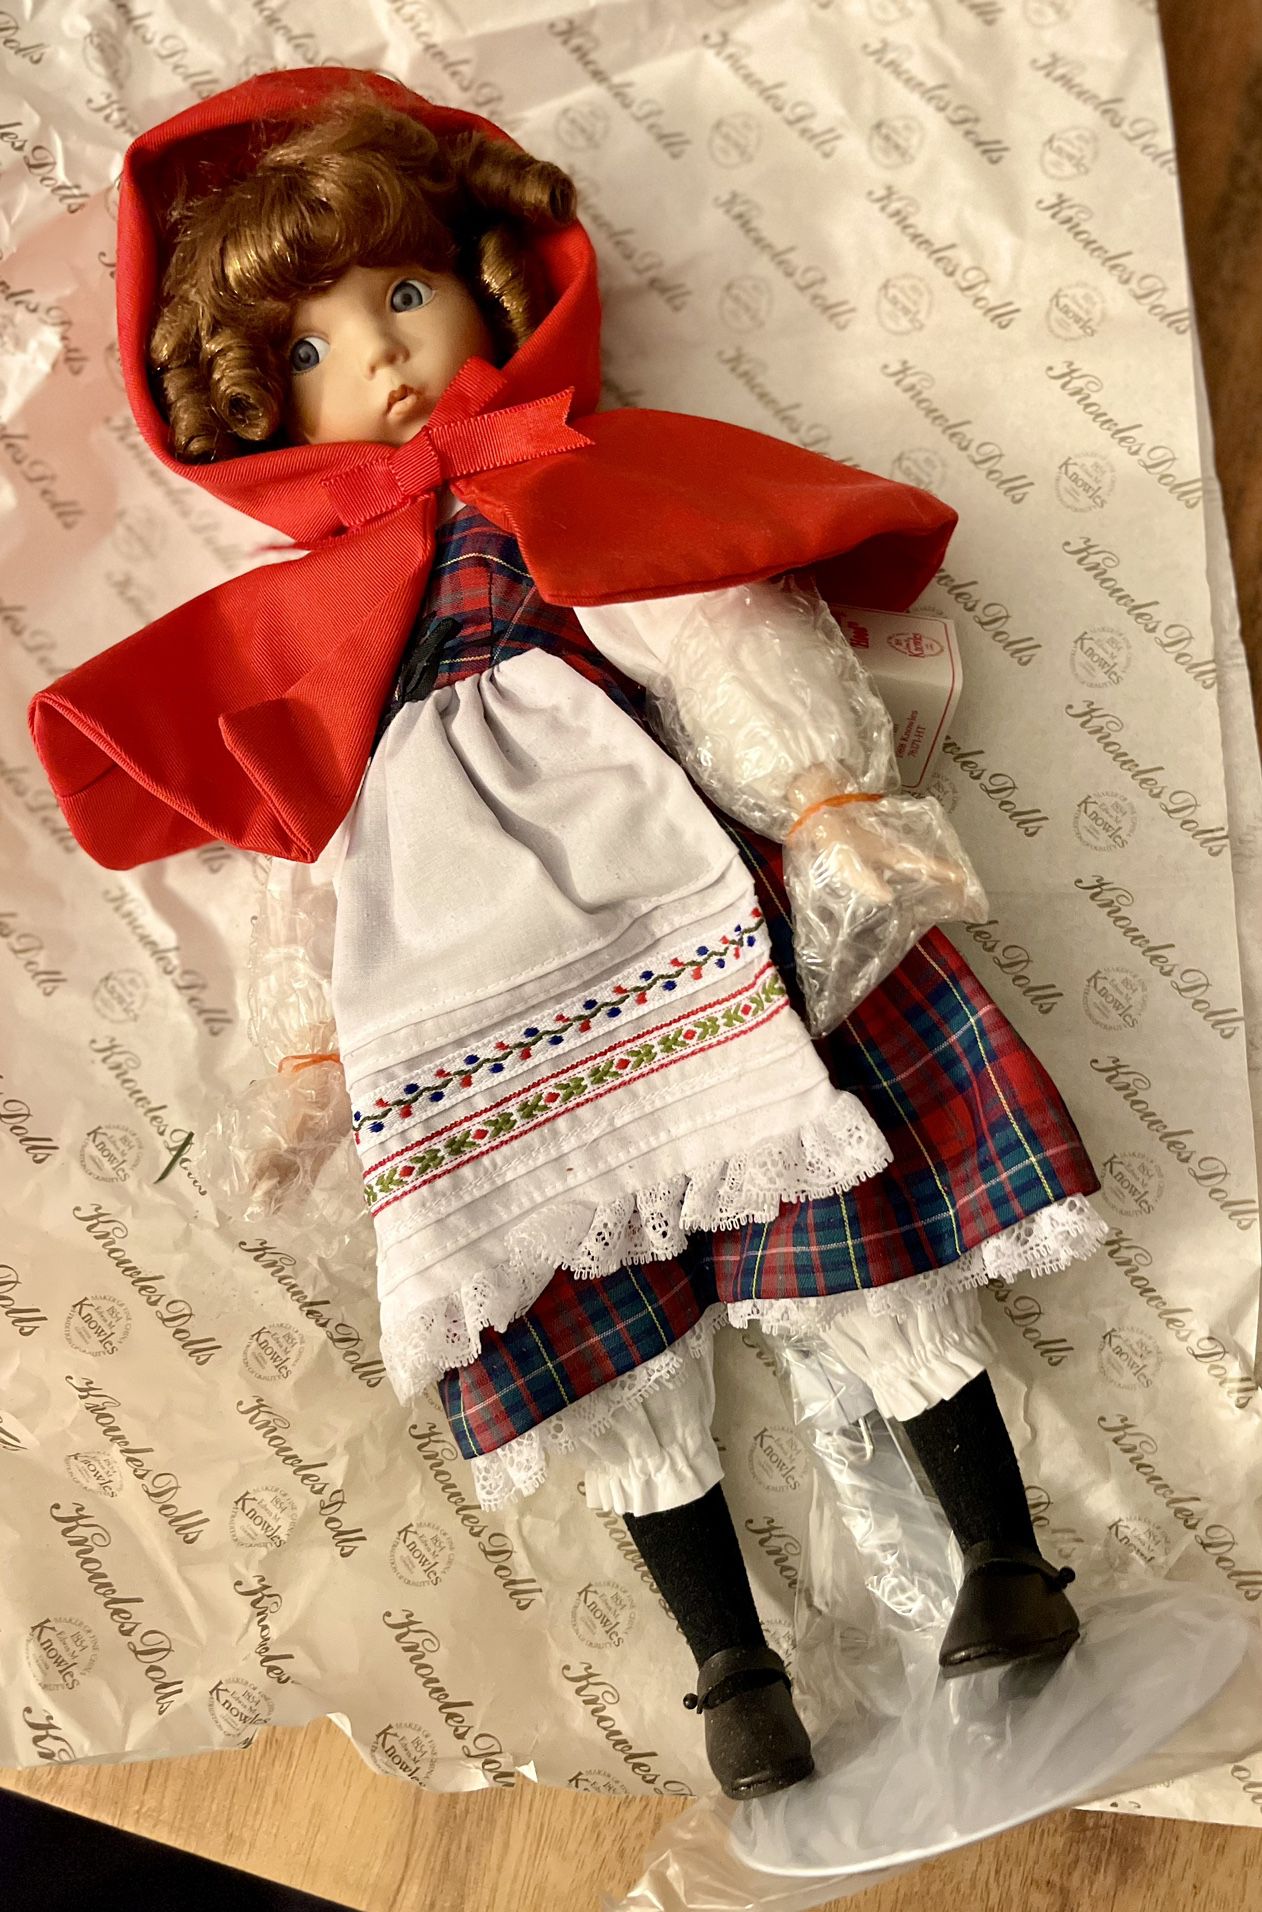 Porcelain Little Red Riding Hood Doll